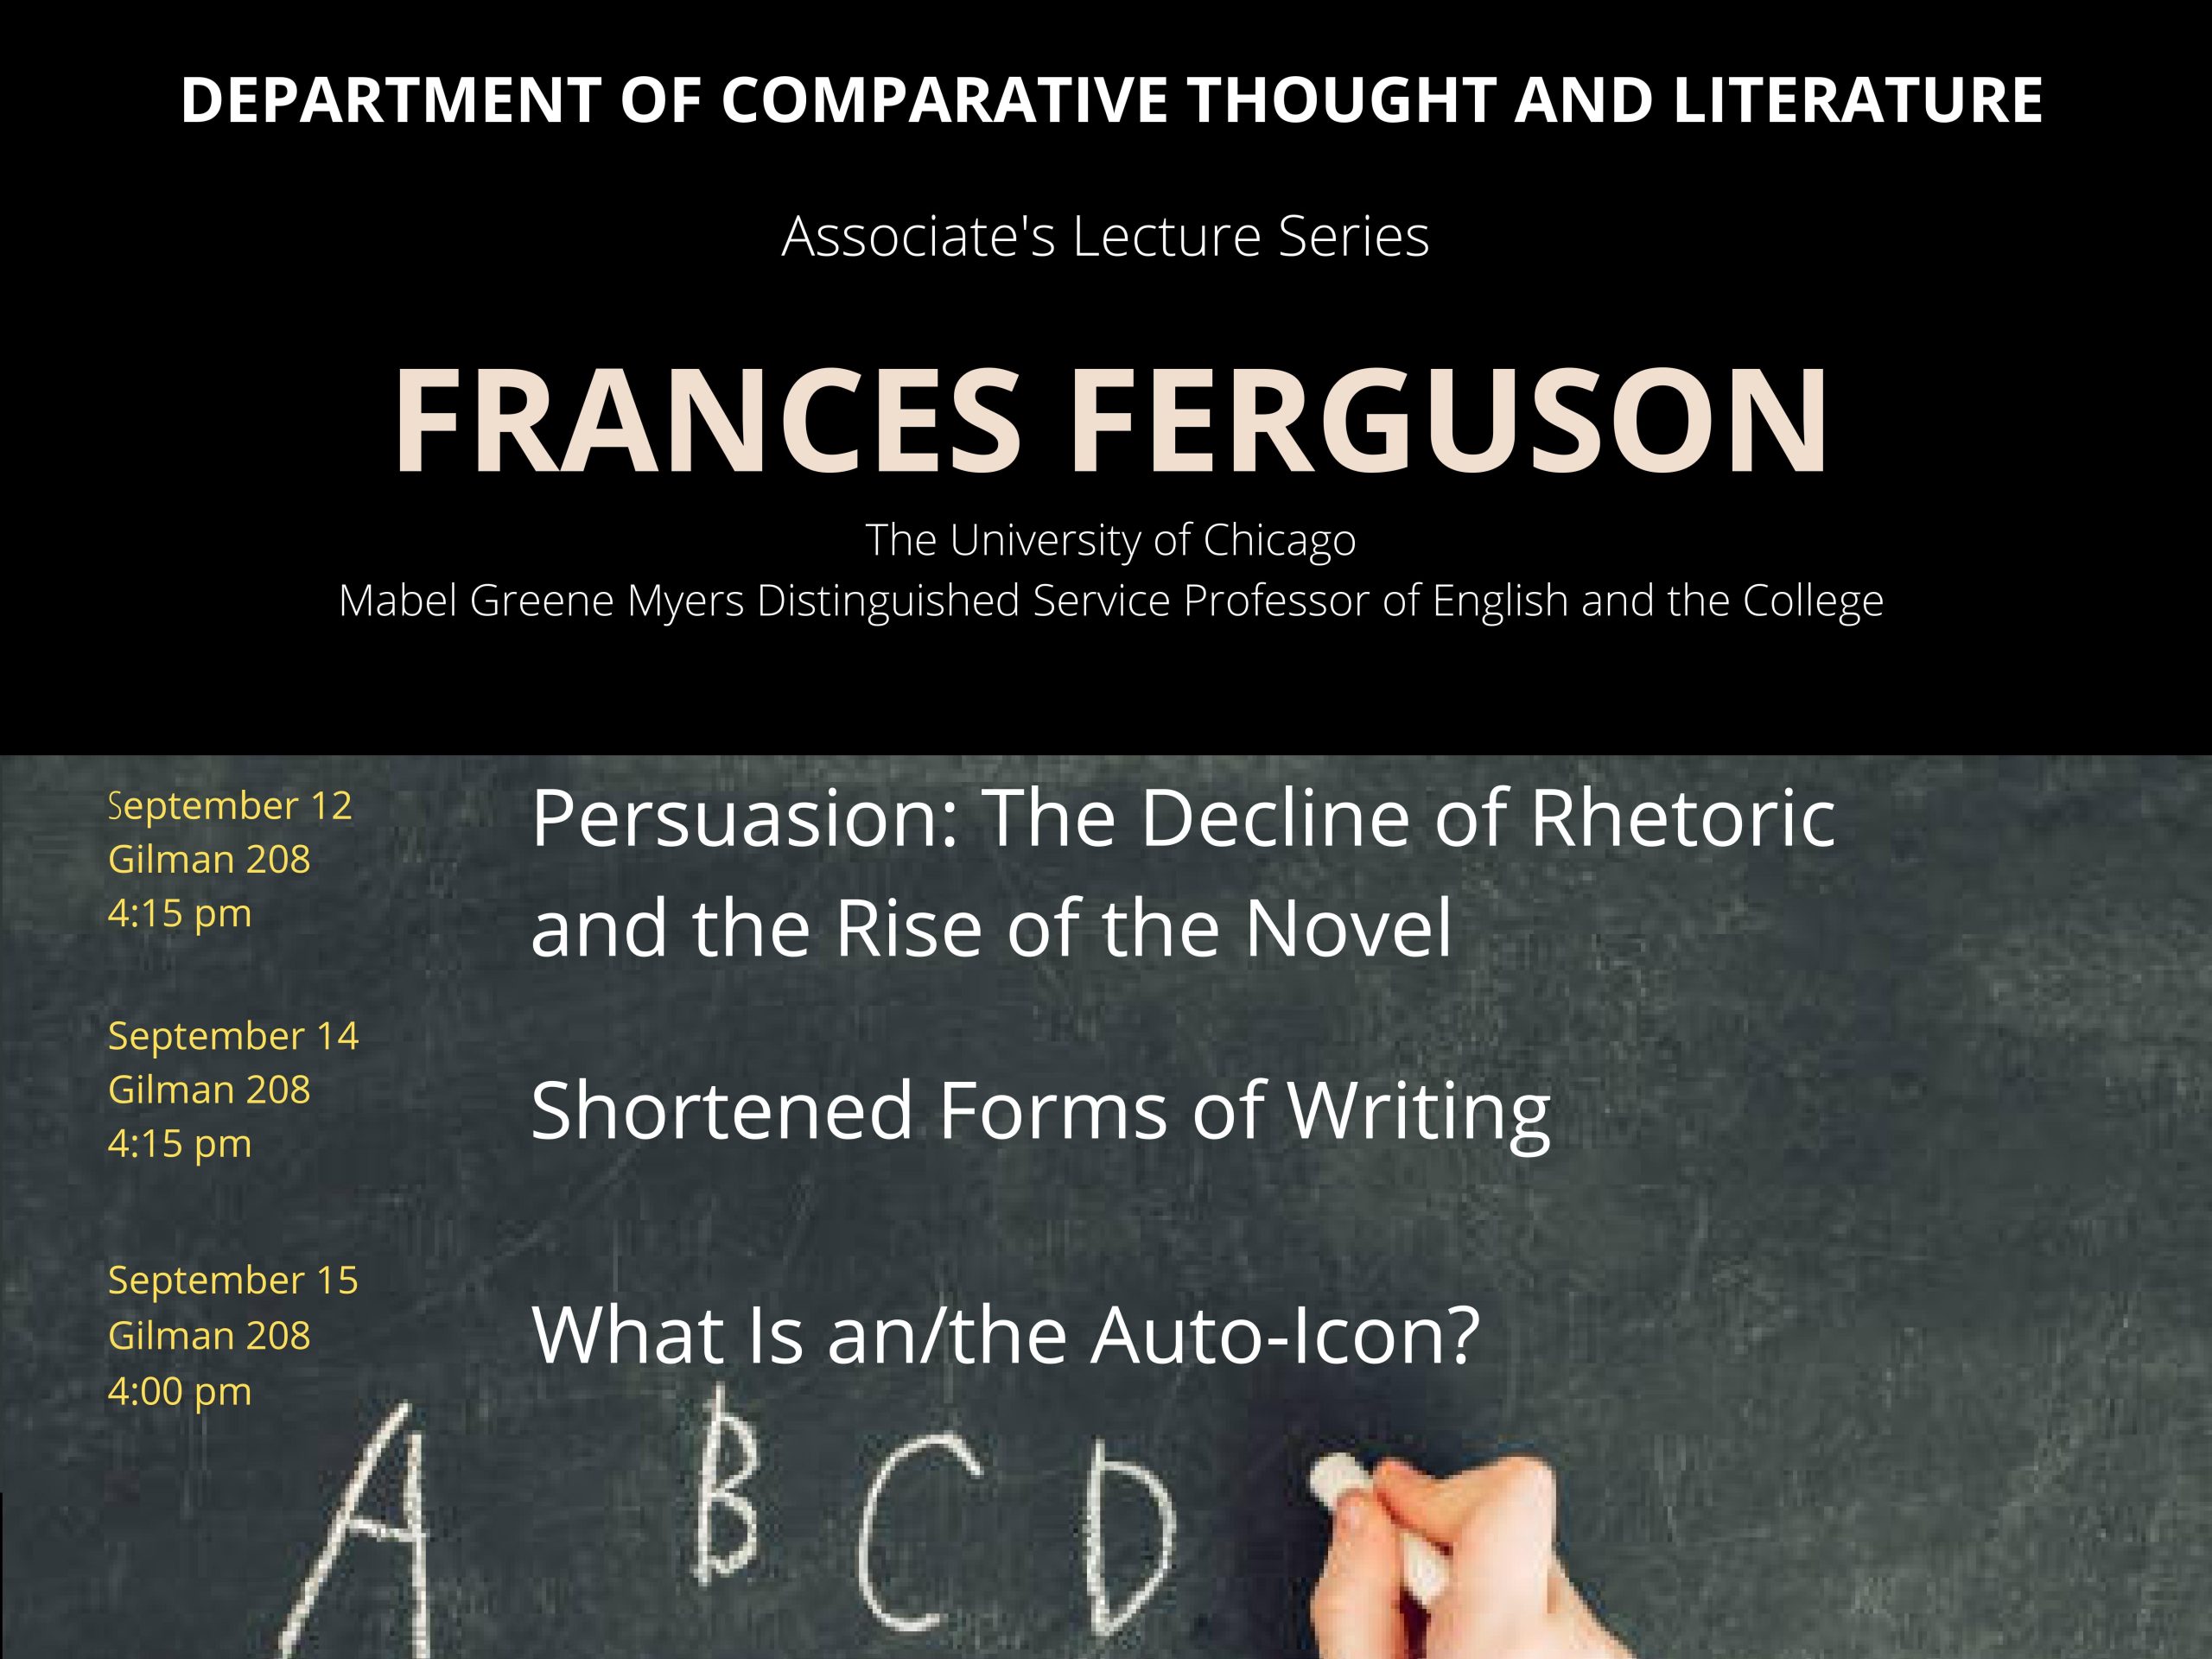 frances ferguson poster. event details in text below.